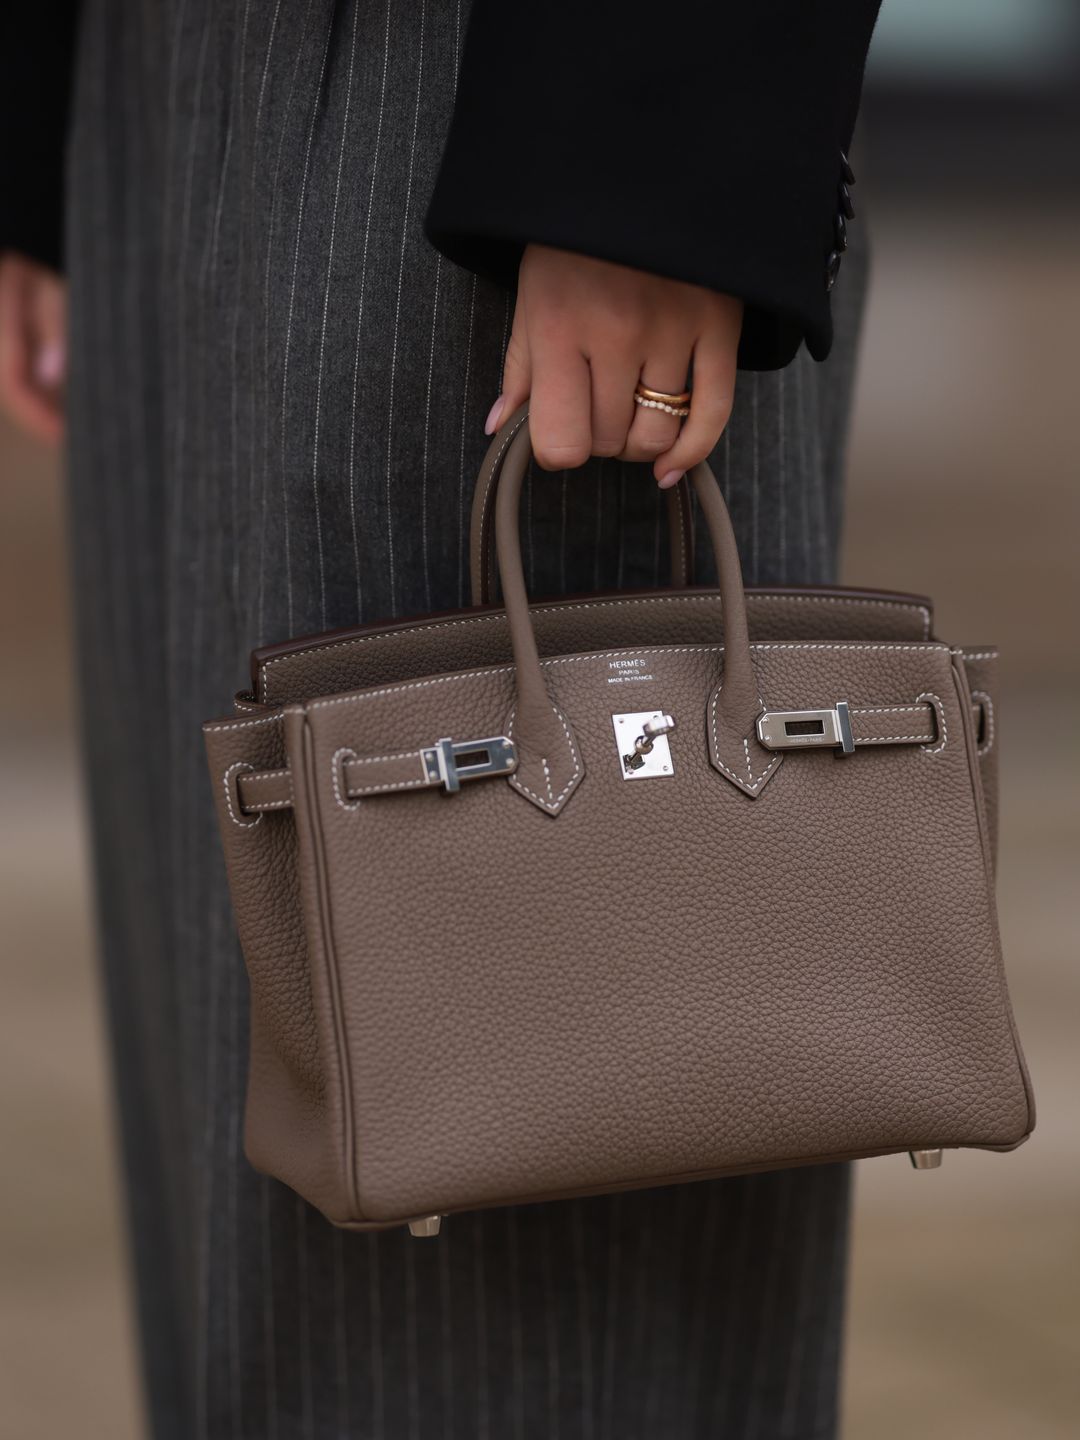 The Hermès Birkin 25 - the holy grail of handbags